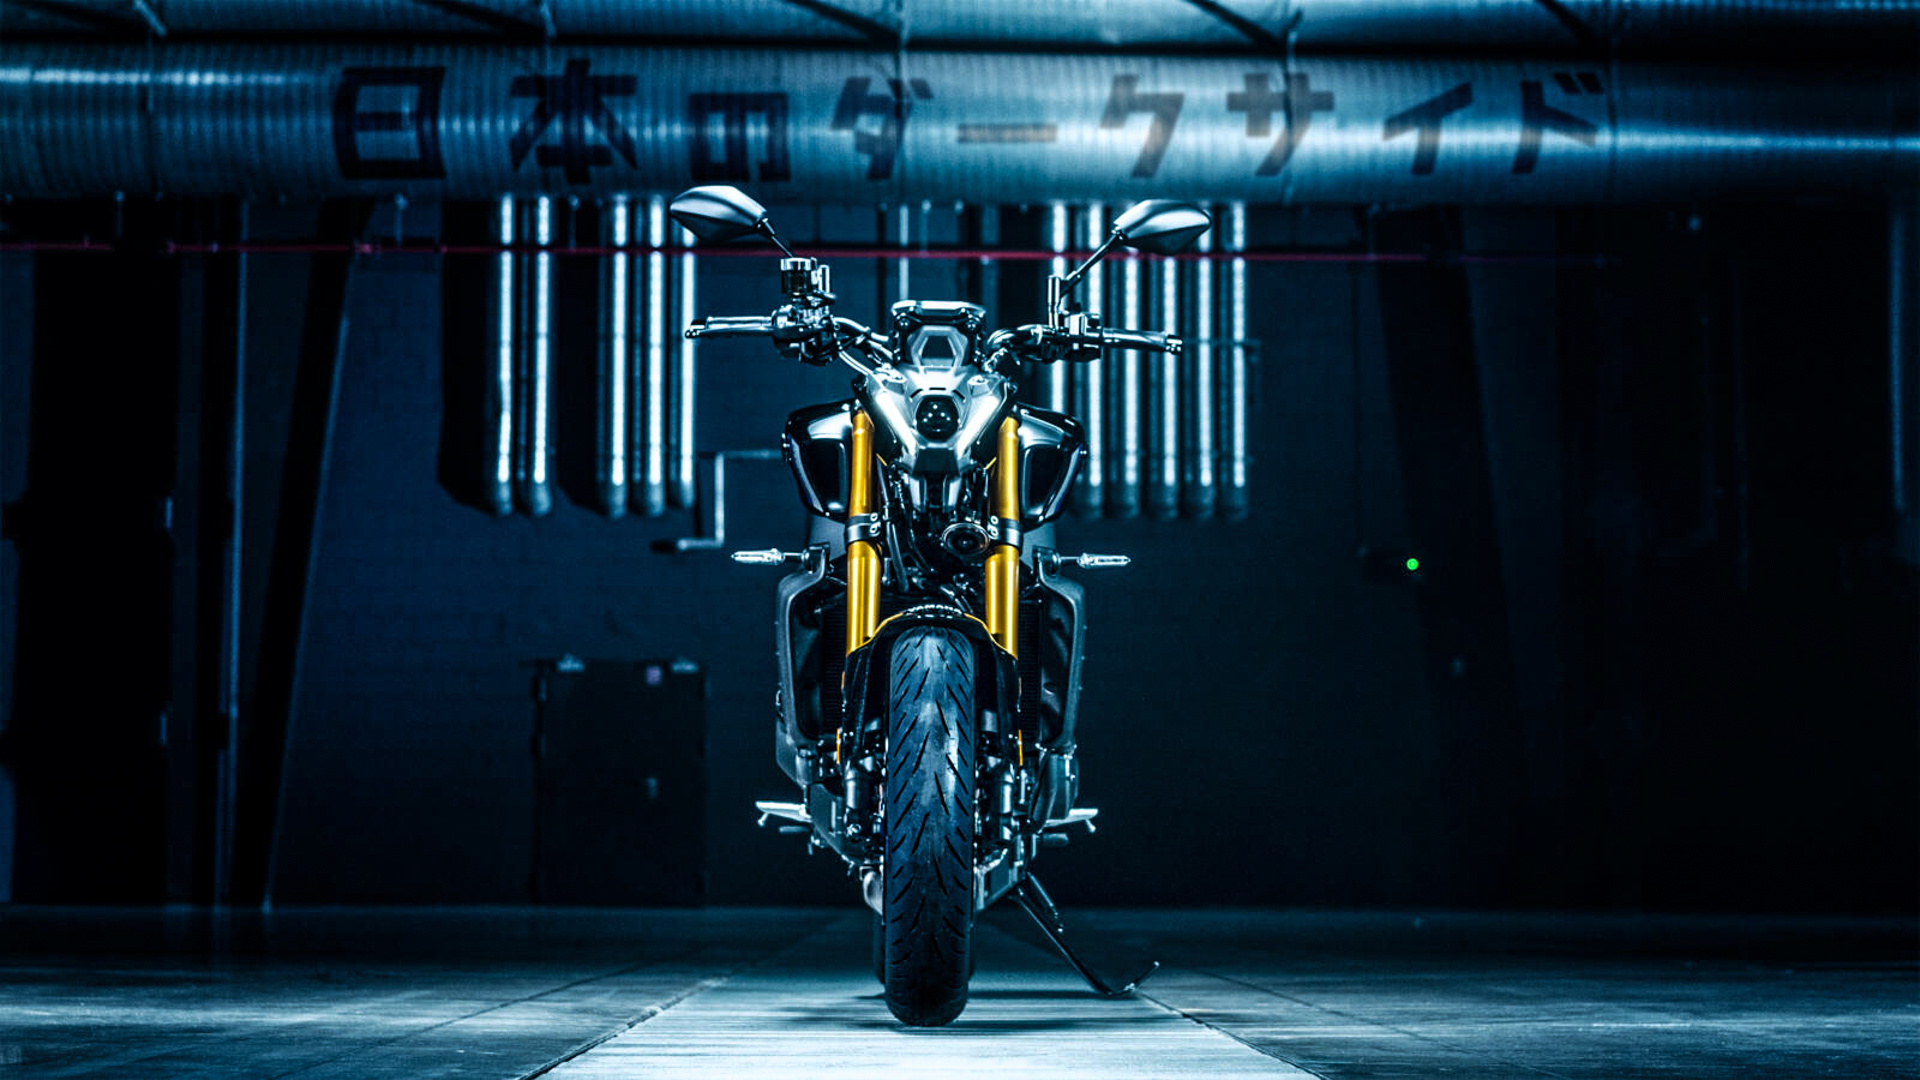 Yamaha MT-09 SP, Premium motorbike, Exhilarating performance, Stunning visuals, 1920x1080 Full HD Desktop